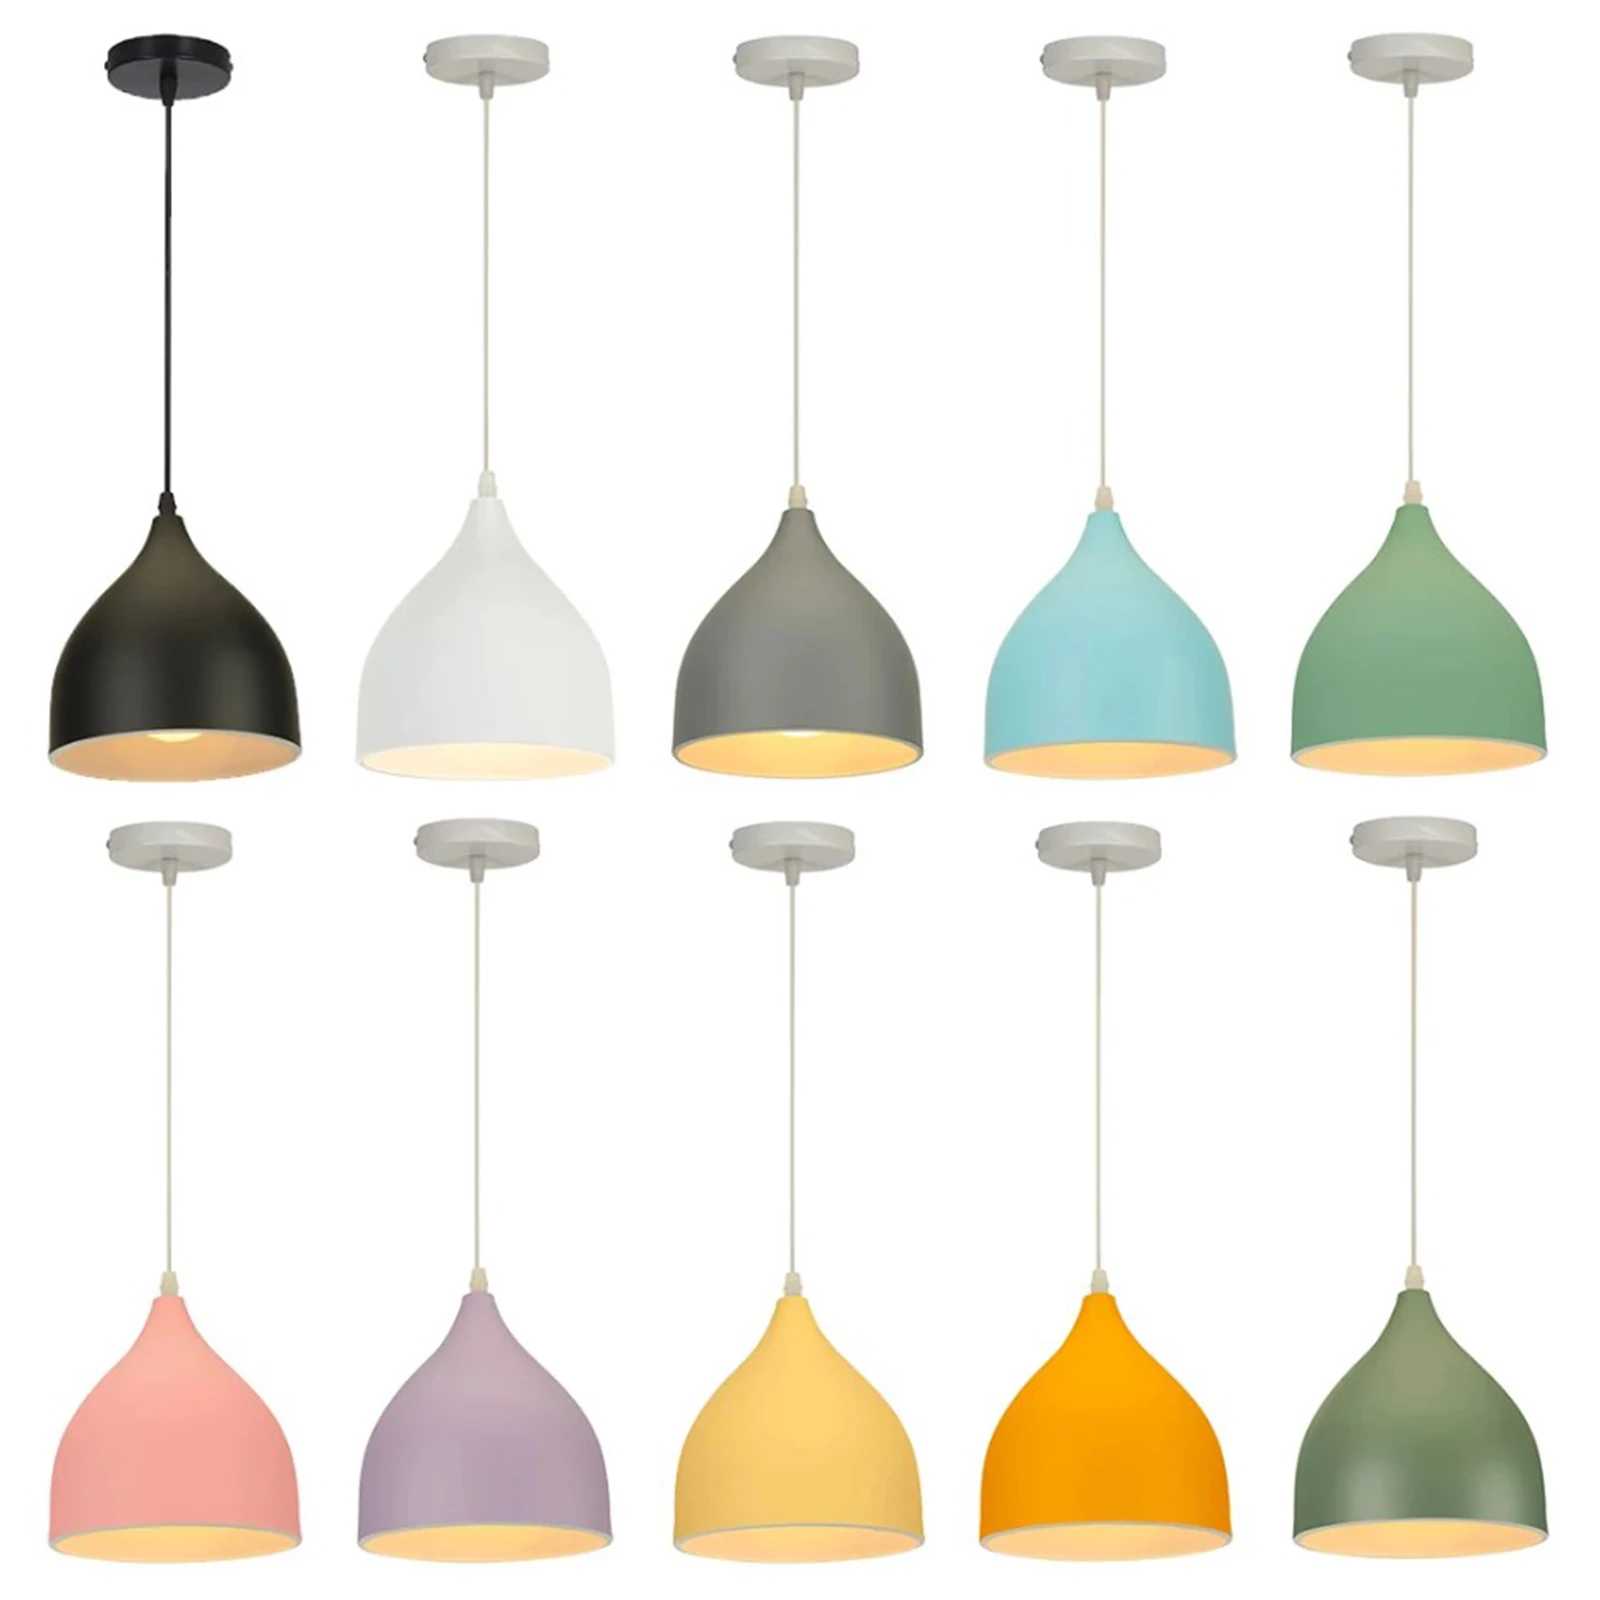 Led pendant light for dinning room restaurant bedroom kitchen macaron hanging lamp thumb155 crop